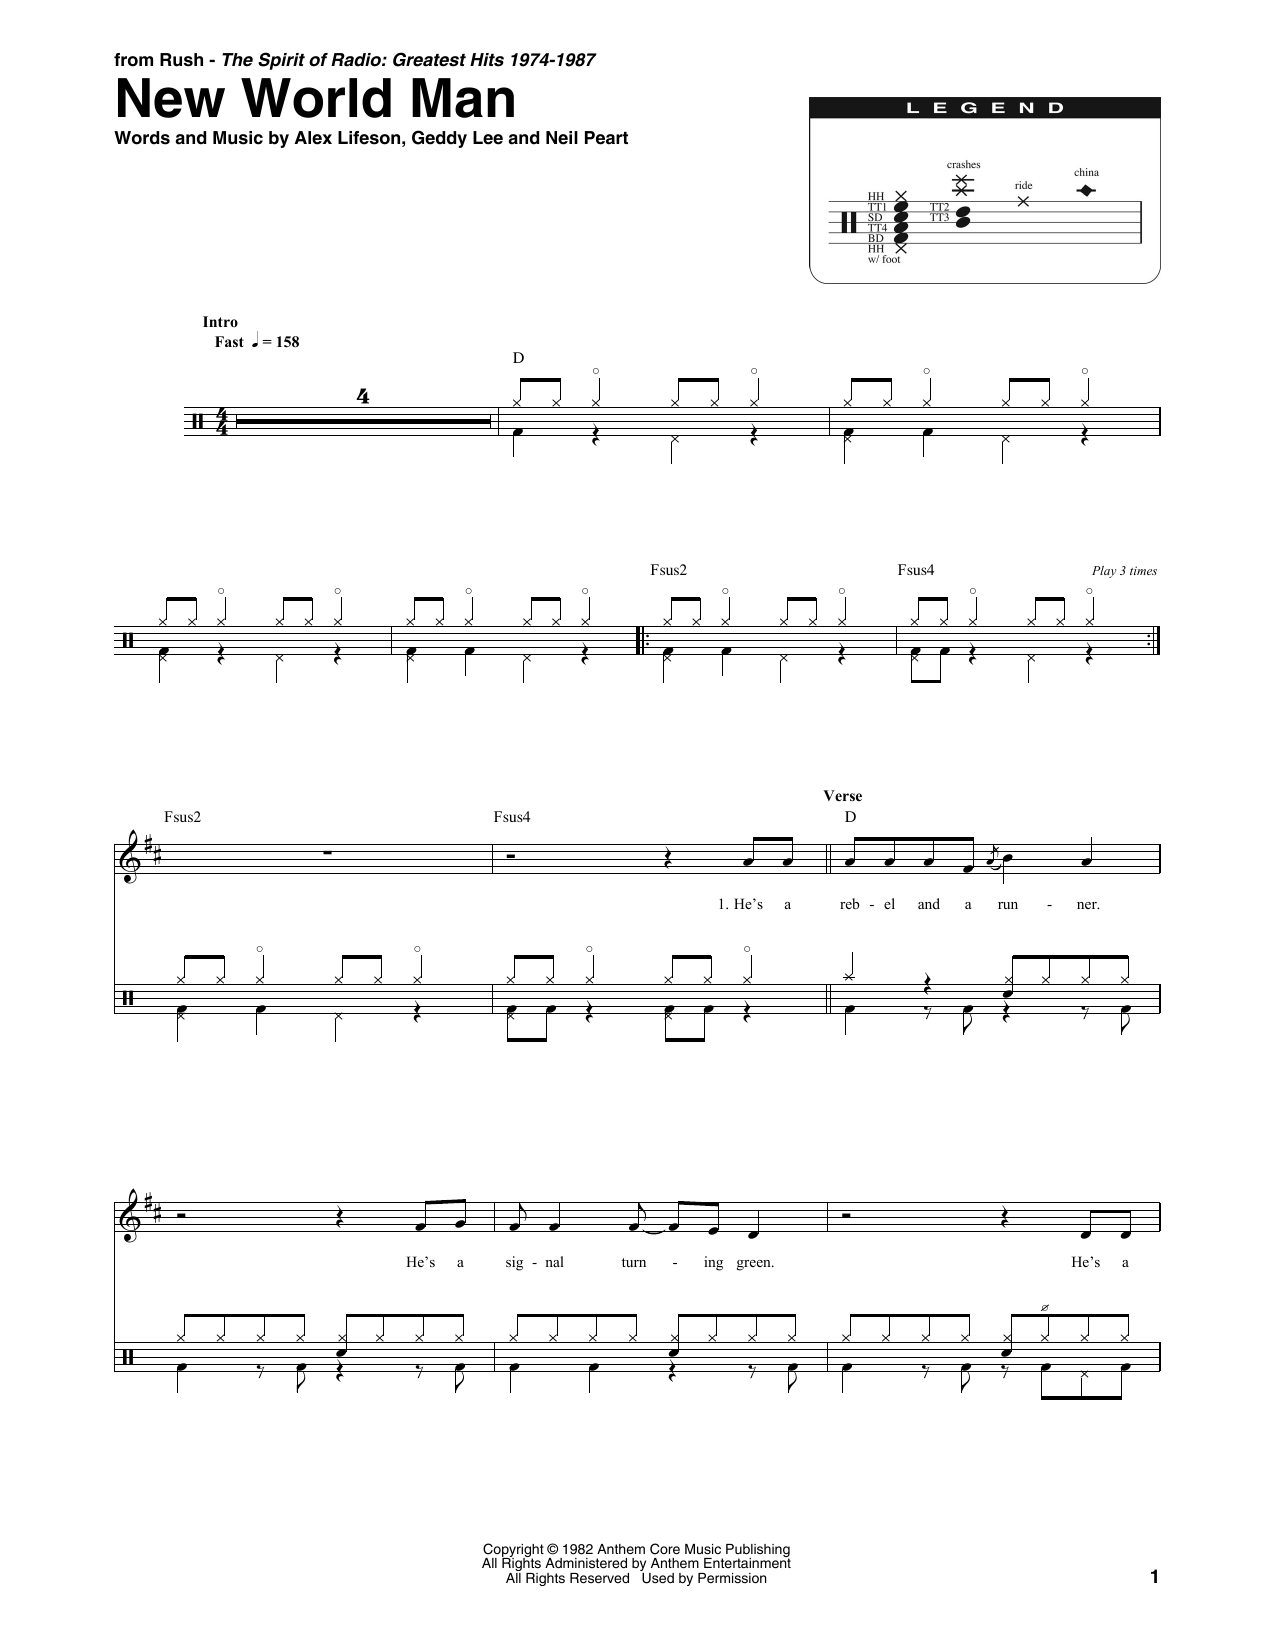 Rush New World Man Sheet Music Notes & Chords for Guitar Tab - Download or Print PDF